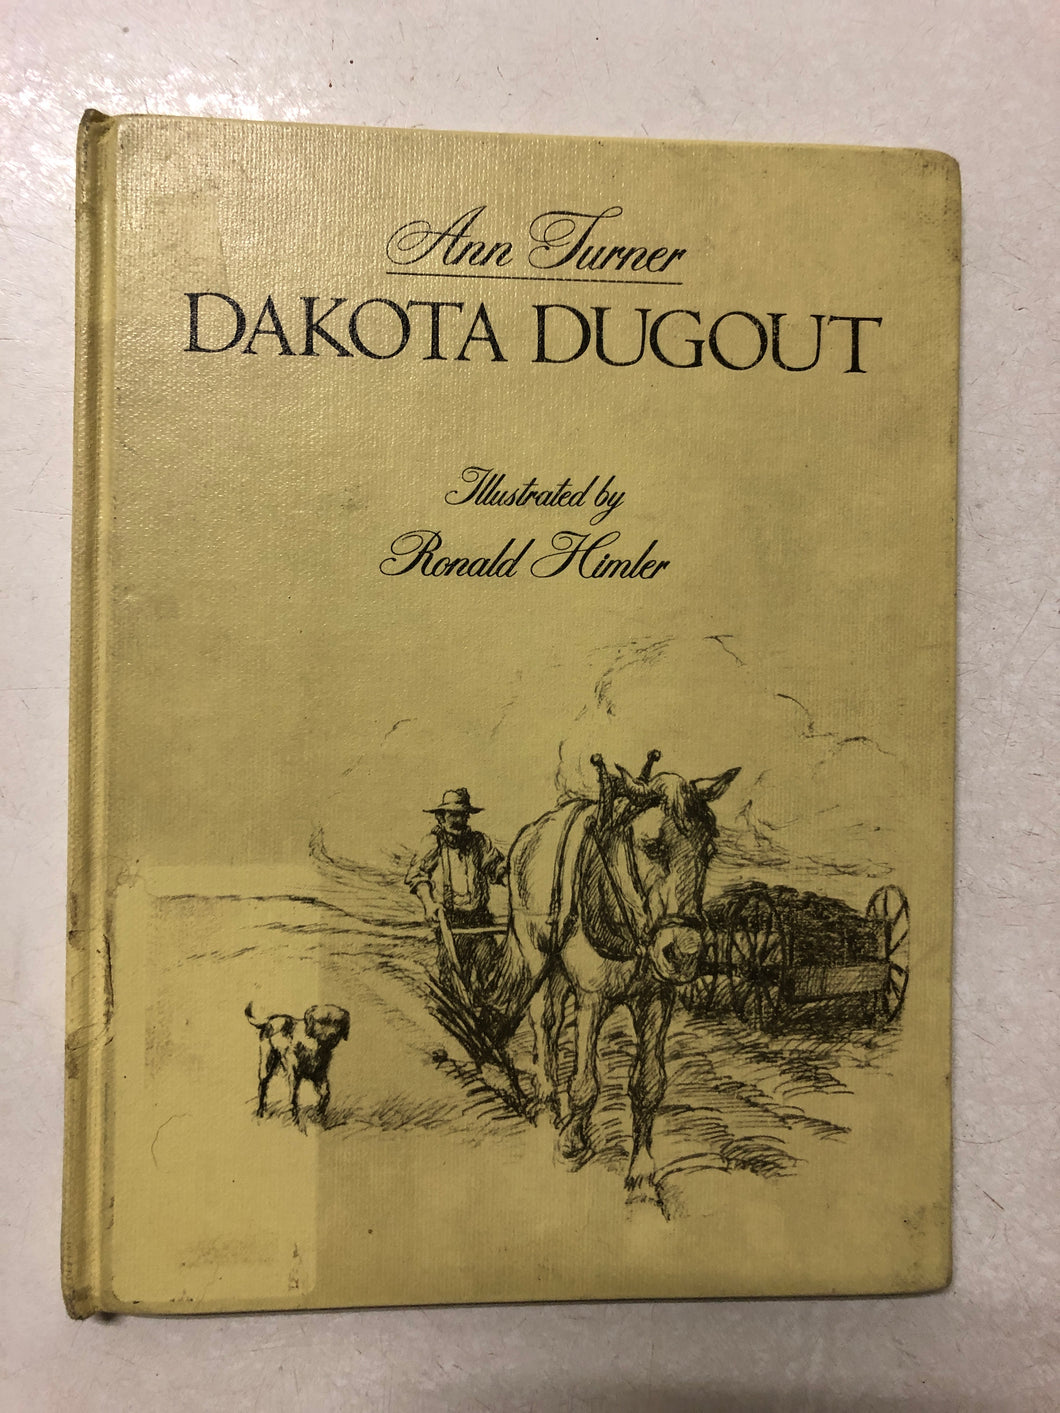 Dakota Dugout - Slick Cat Books 